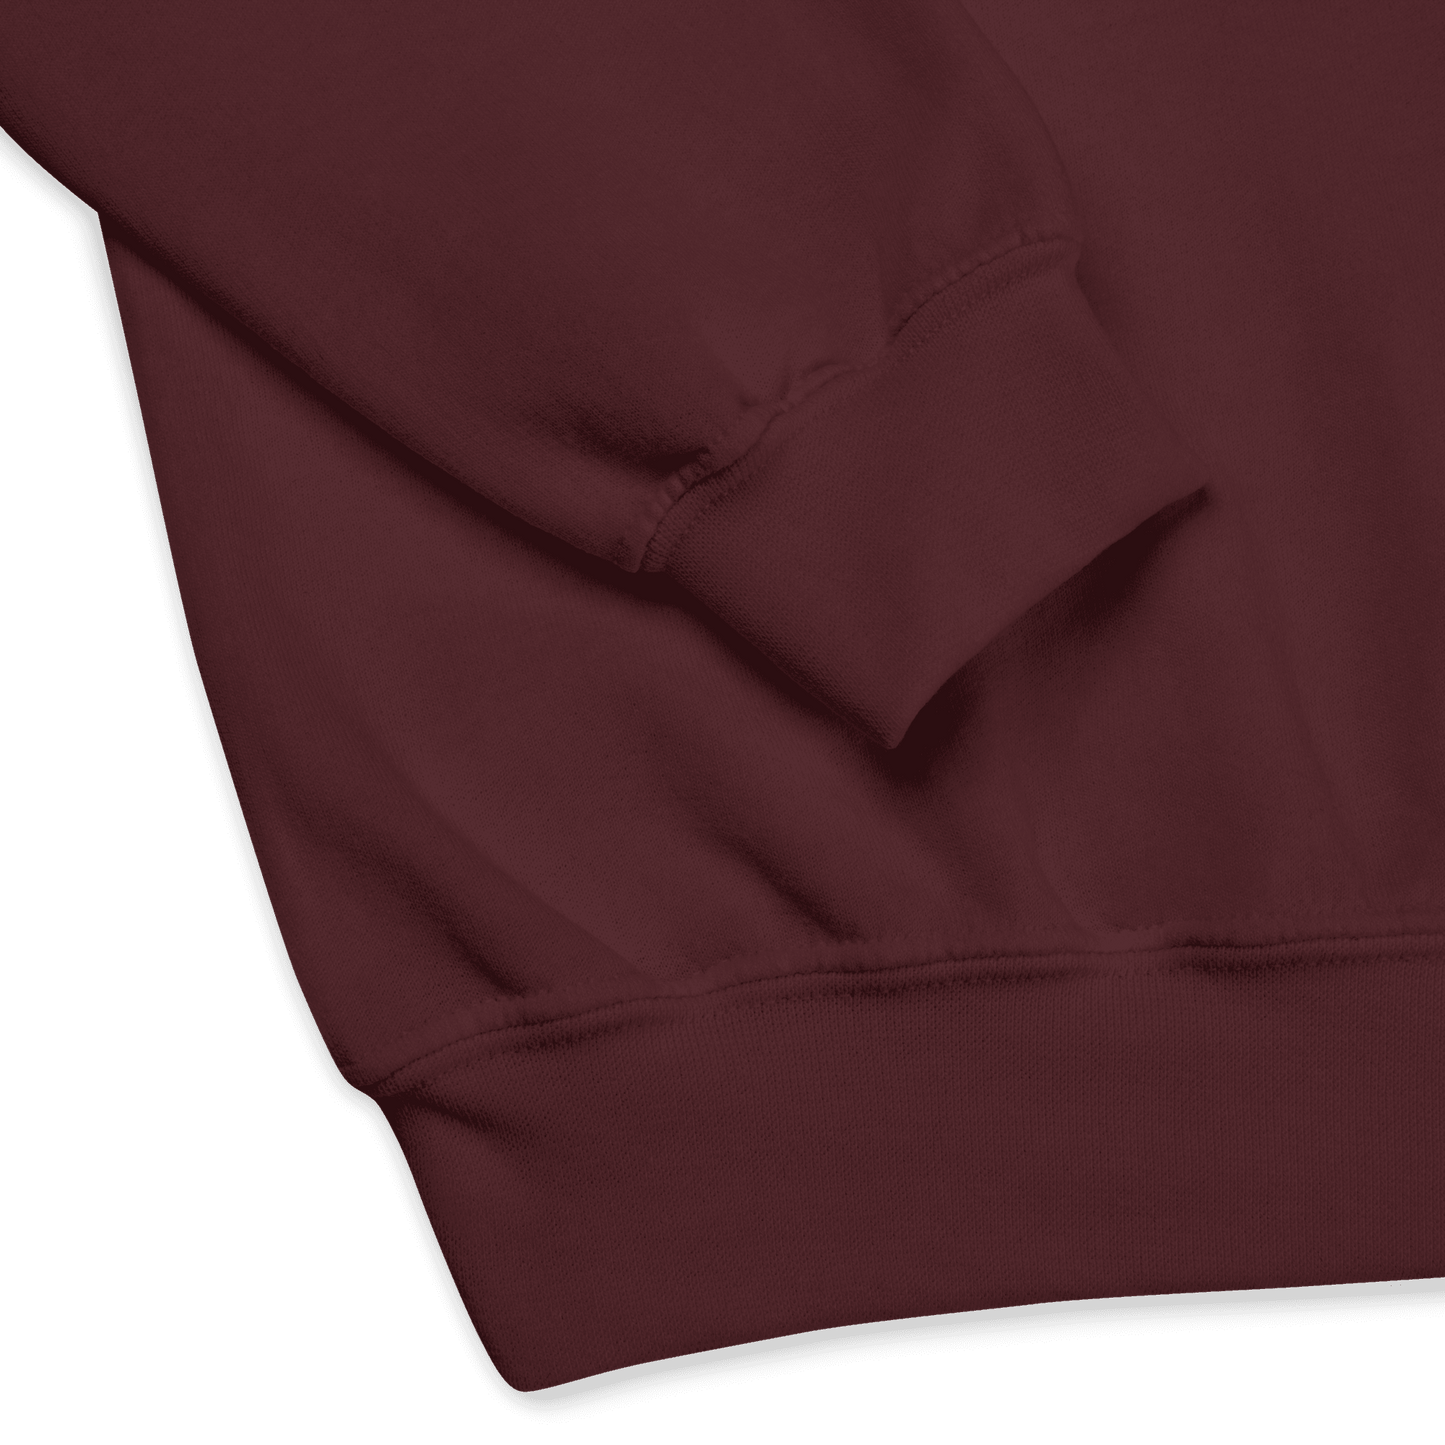 Official Merchandise embroidered sweatshirt